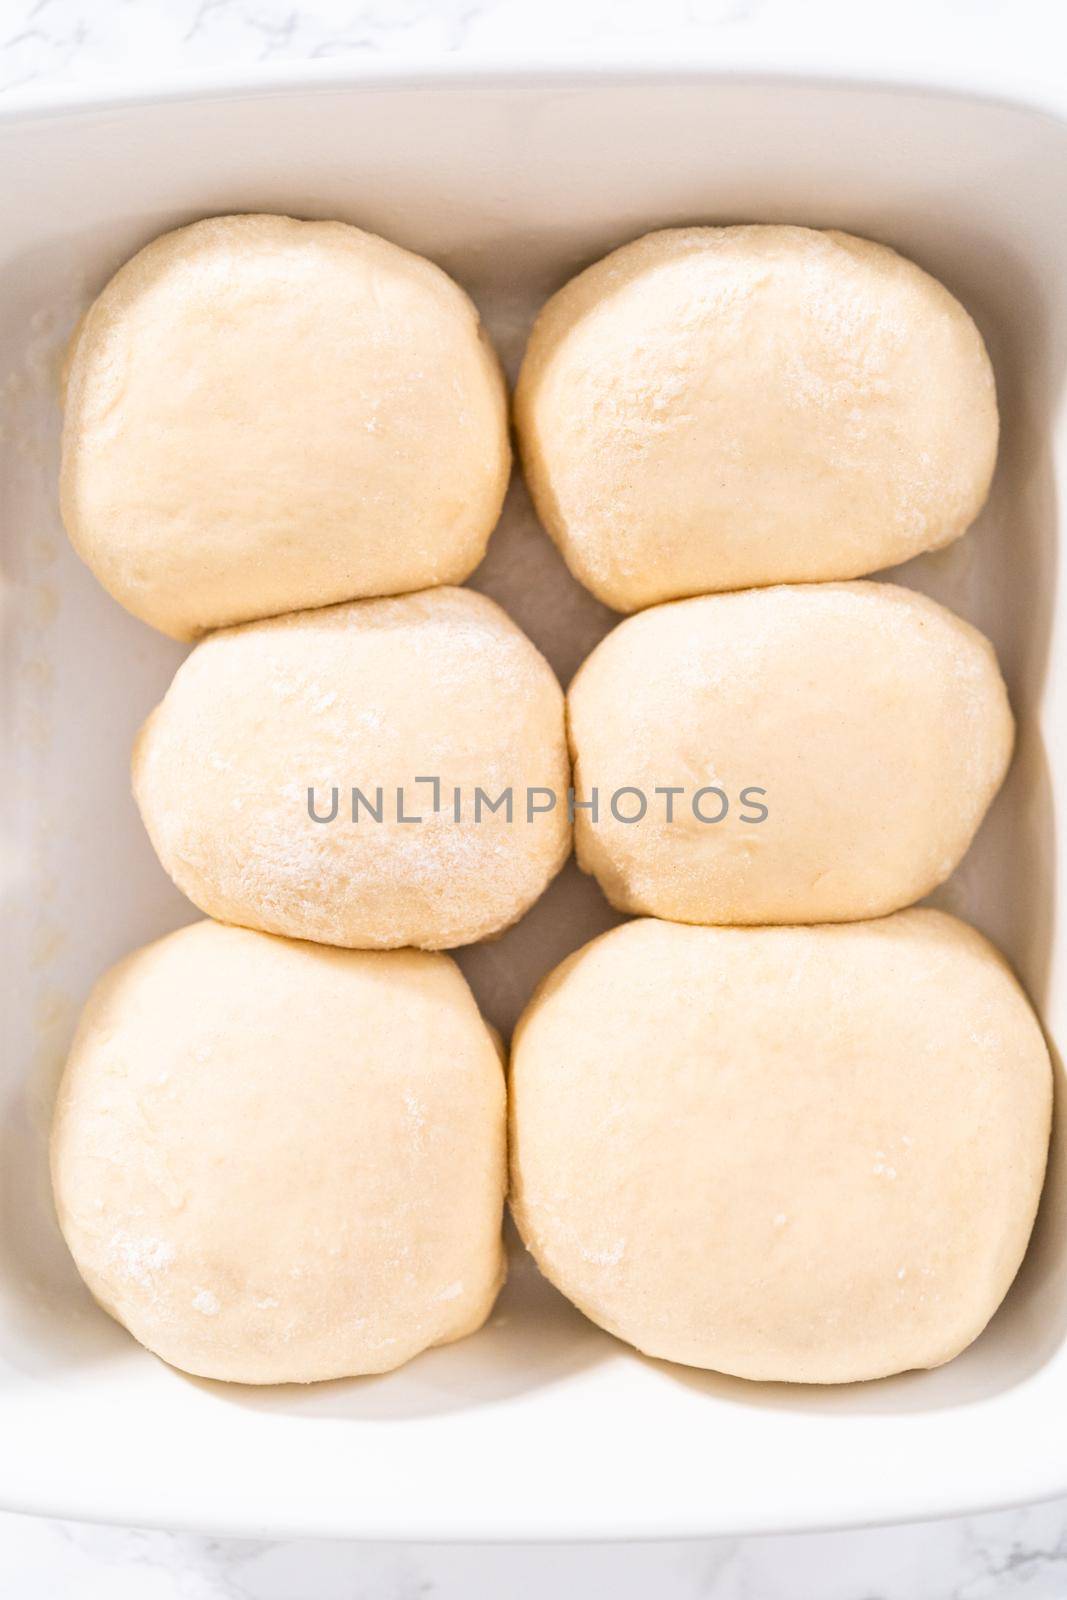 Rising dough in a white ceramic dish to prepare dinner rolls.